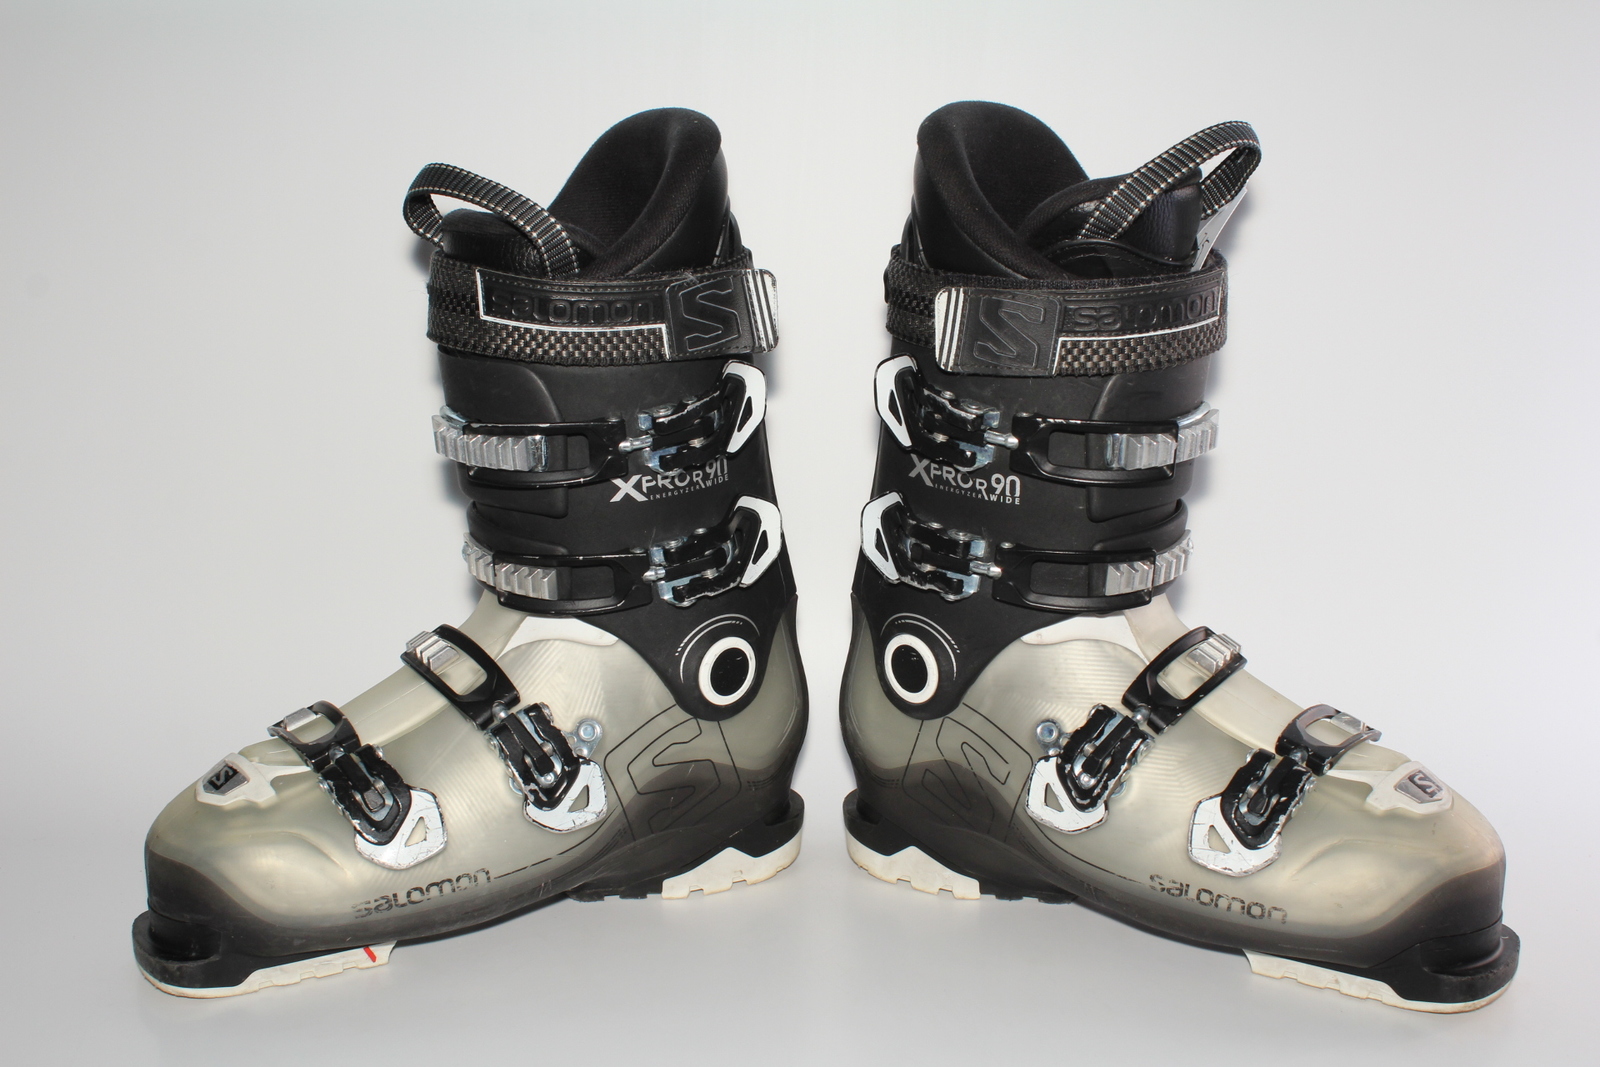 Lyžařské boty Salomon X Pro R90 wide vel. EU42.5 flexe 90